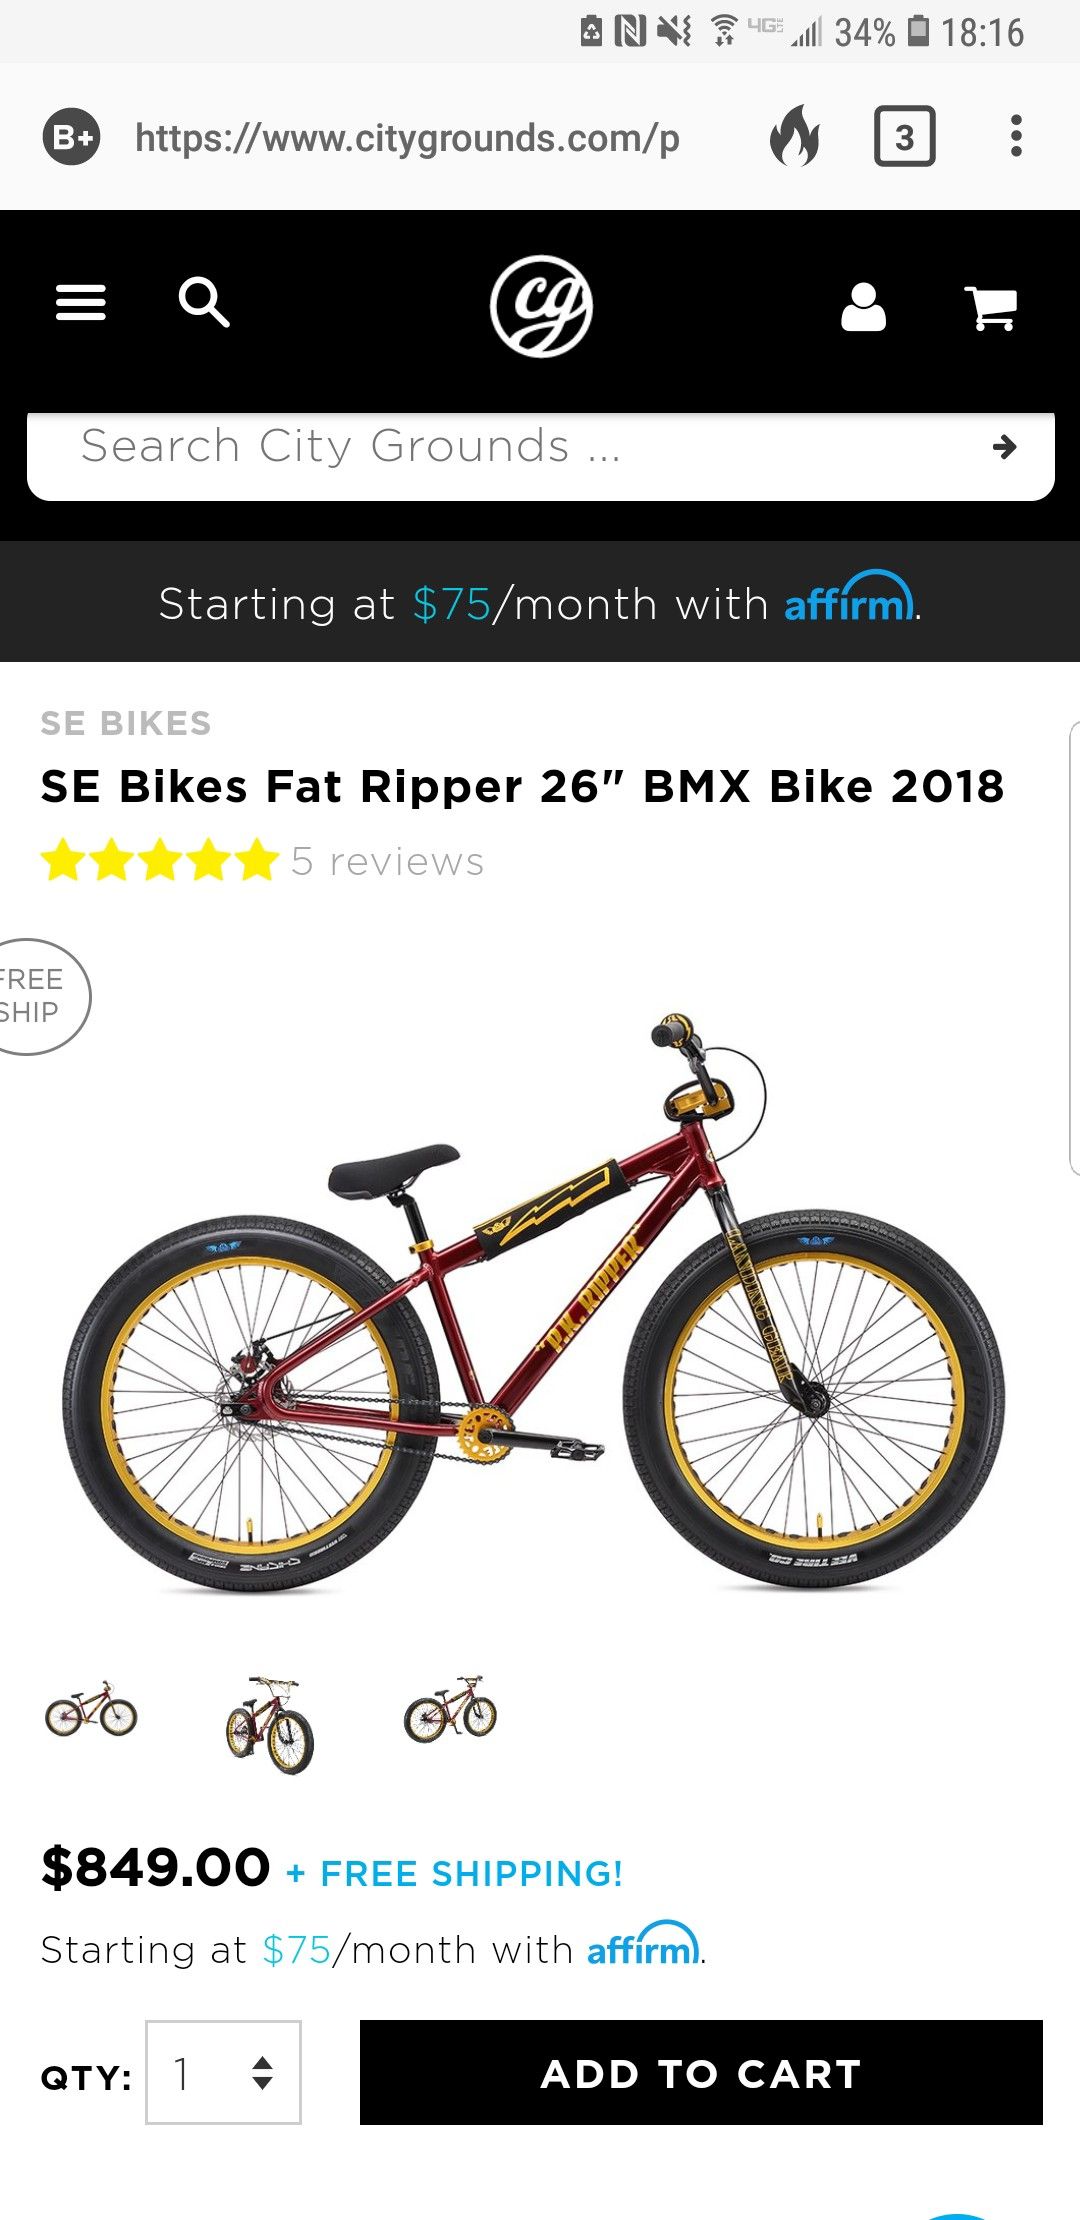 SE Bikes Fat Ripper 26" BMX Bike 2018